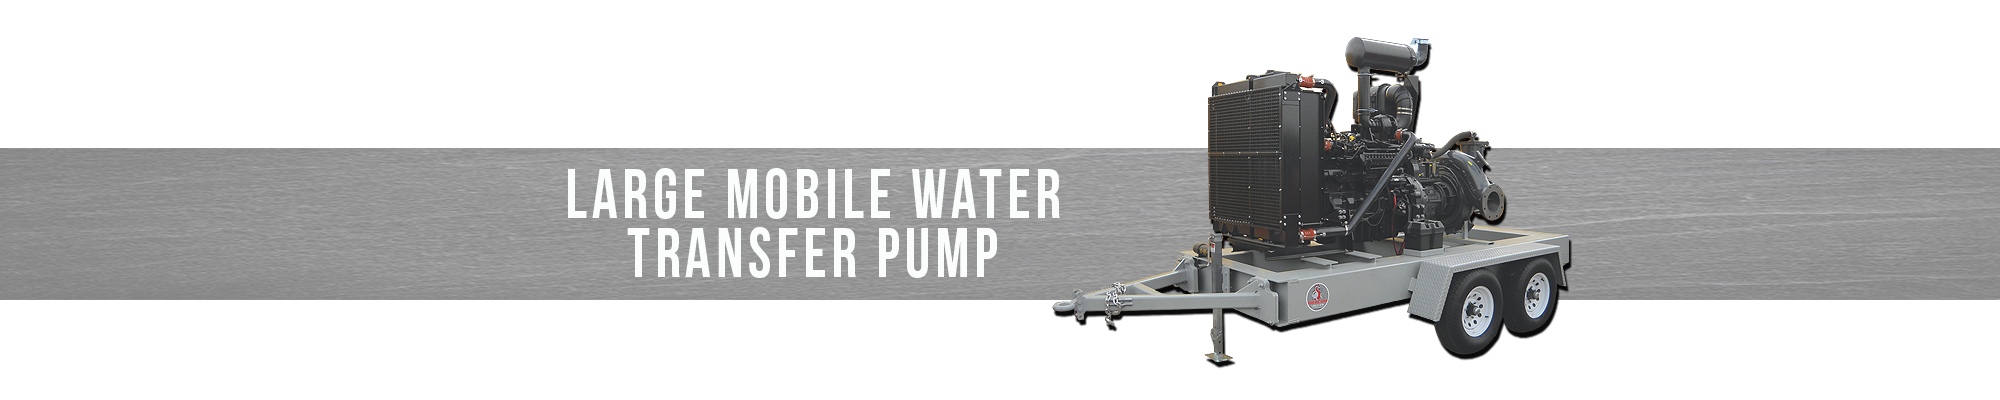 Large Mobile Water Transfer Pump